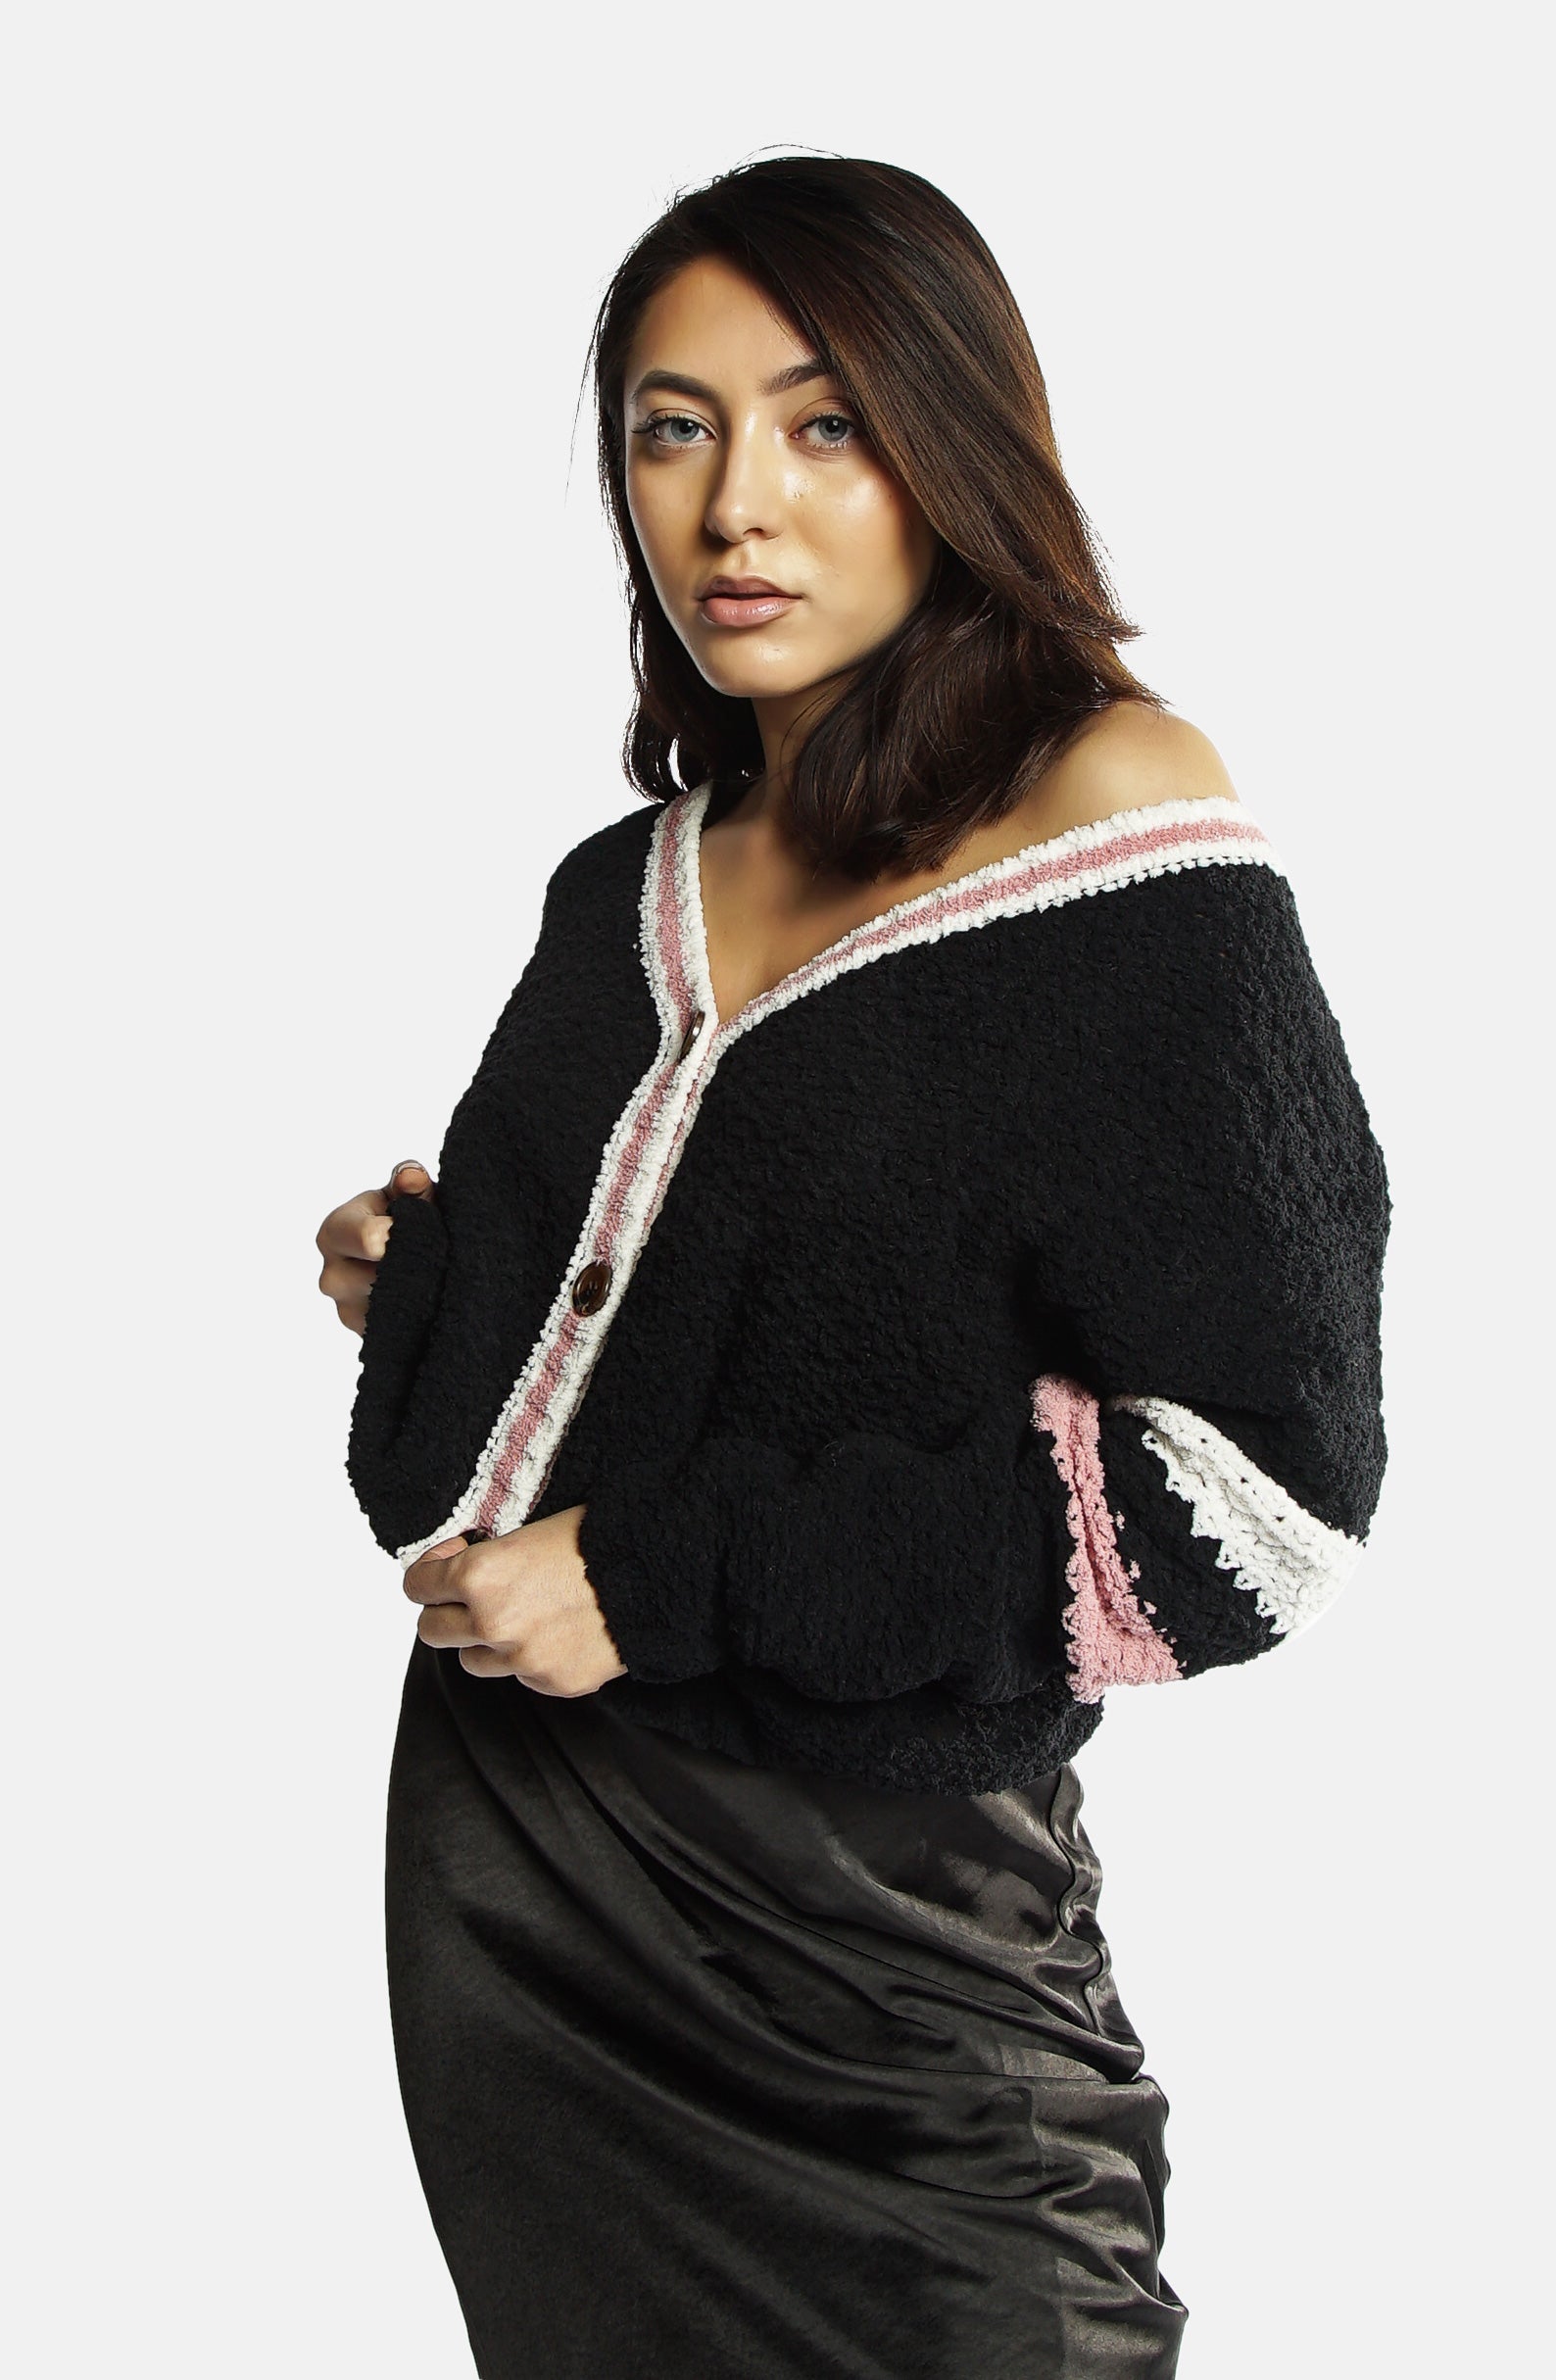 Mandy Sweater